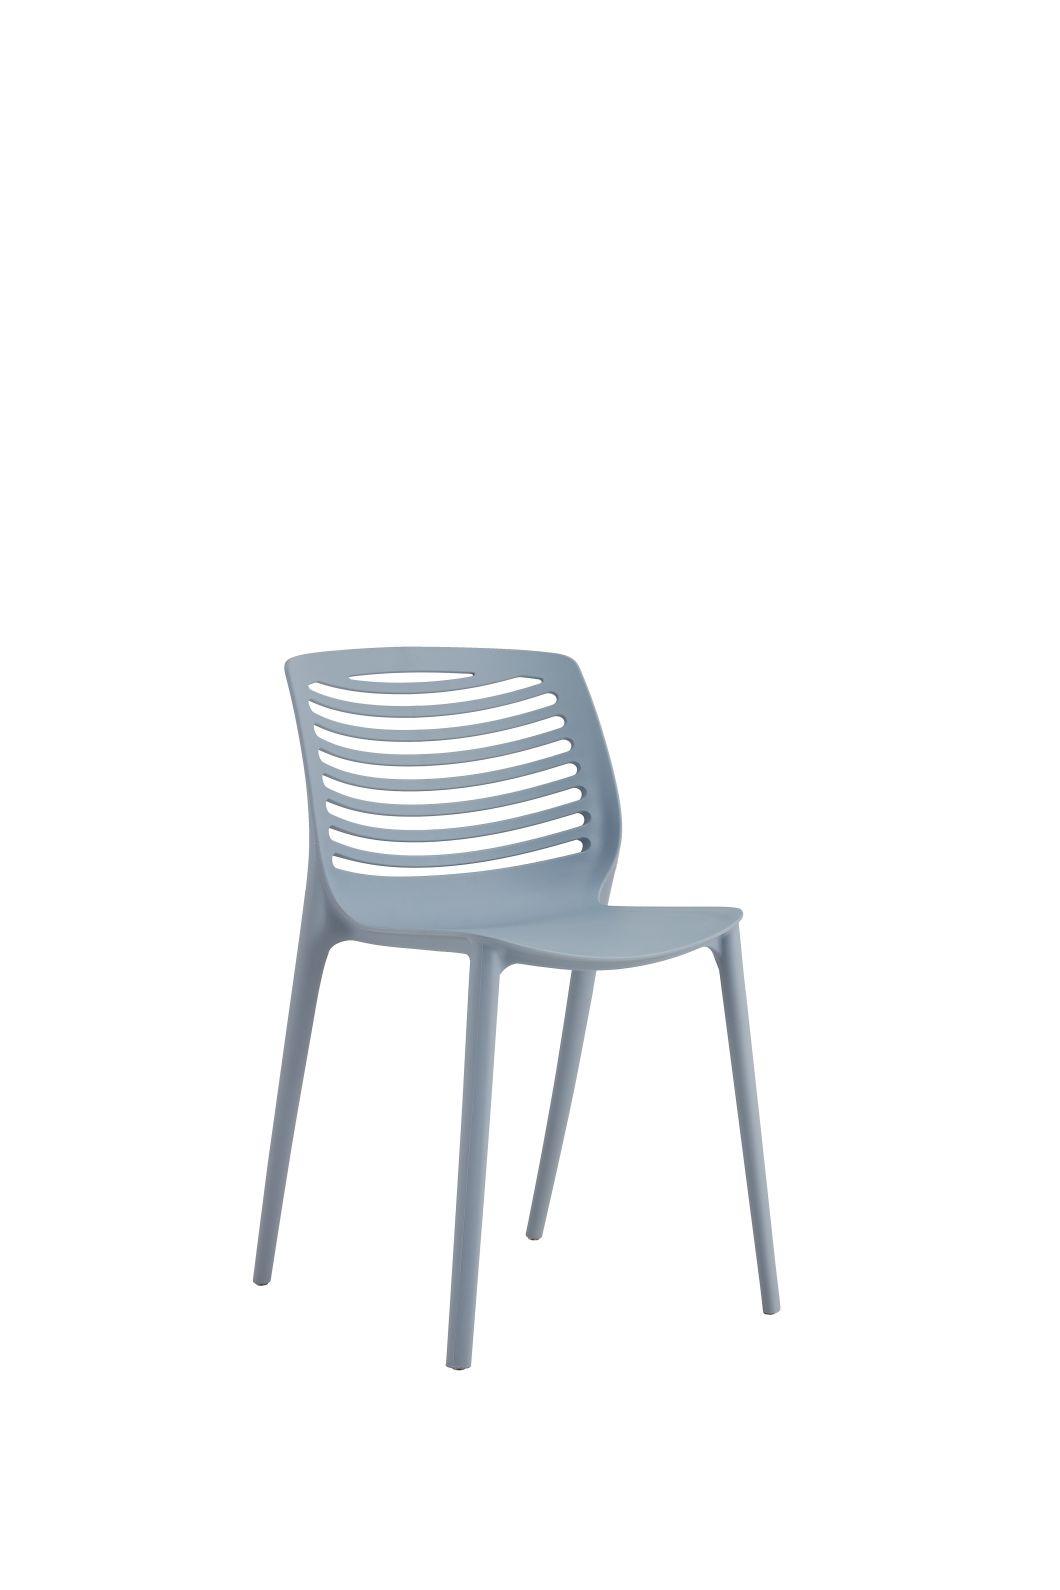 Hot Selling Modern Designer Furniture Stackable PP Plastic Dining Chair